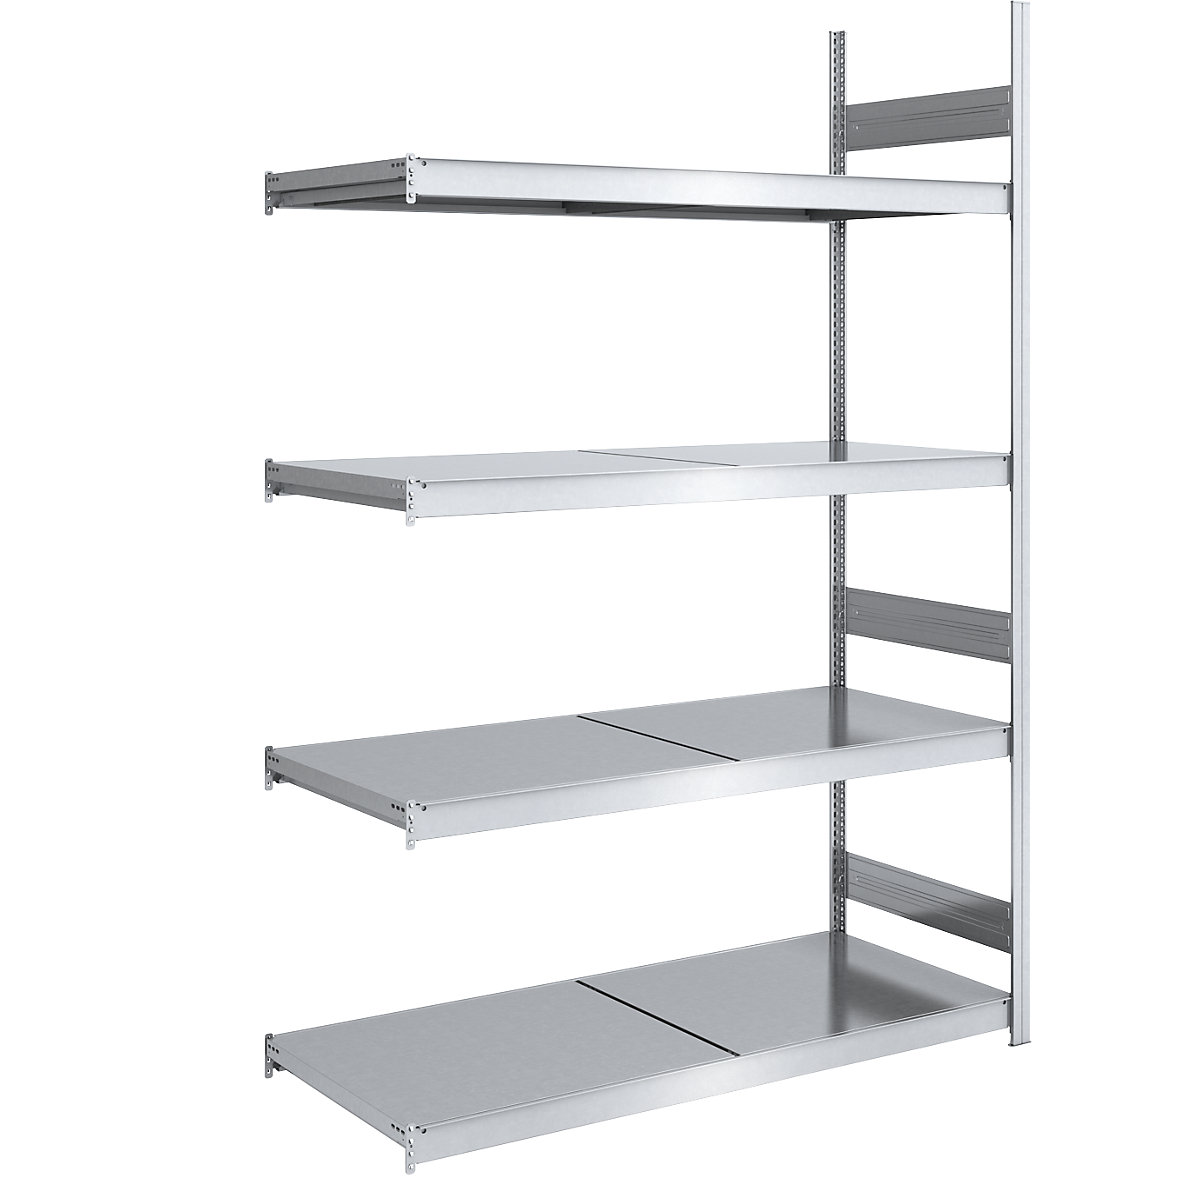 Wide span boltless shelving unit with steel shelves – hofe, height 2500 mm, shelf width 1500 mm, shelf depth 800 mm, extension shelf unit